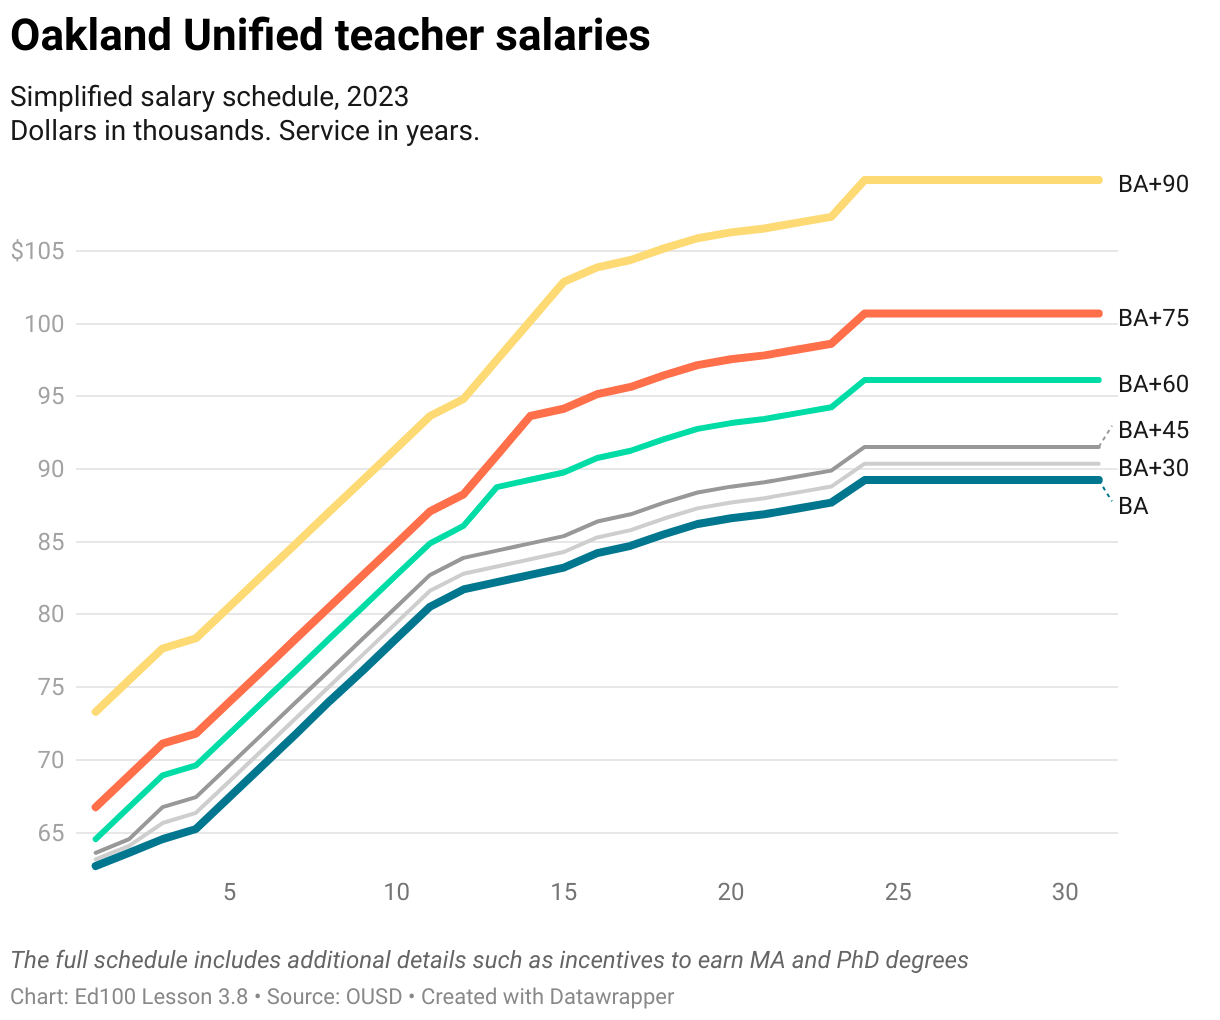 Oakland Unified School District salary schedule for teachers, 2023